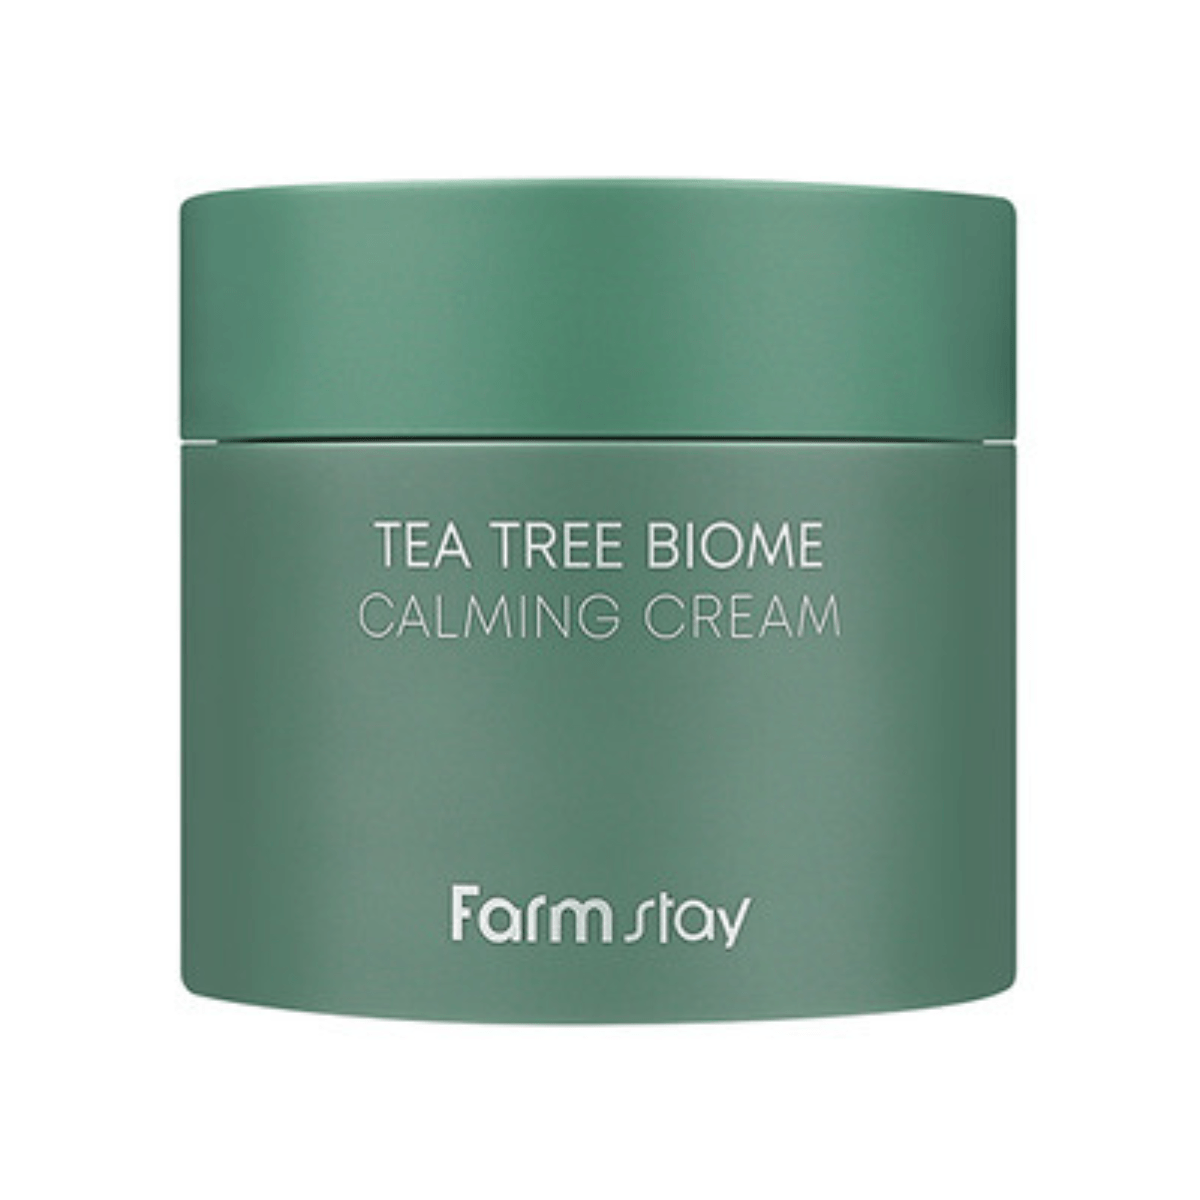 Farmstay Tea Tree Biome Calming Cream - Korea Korean Skincare Face Cream - Ushops